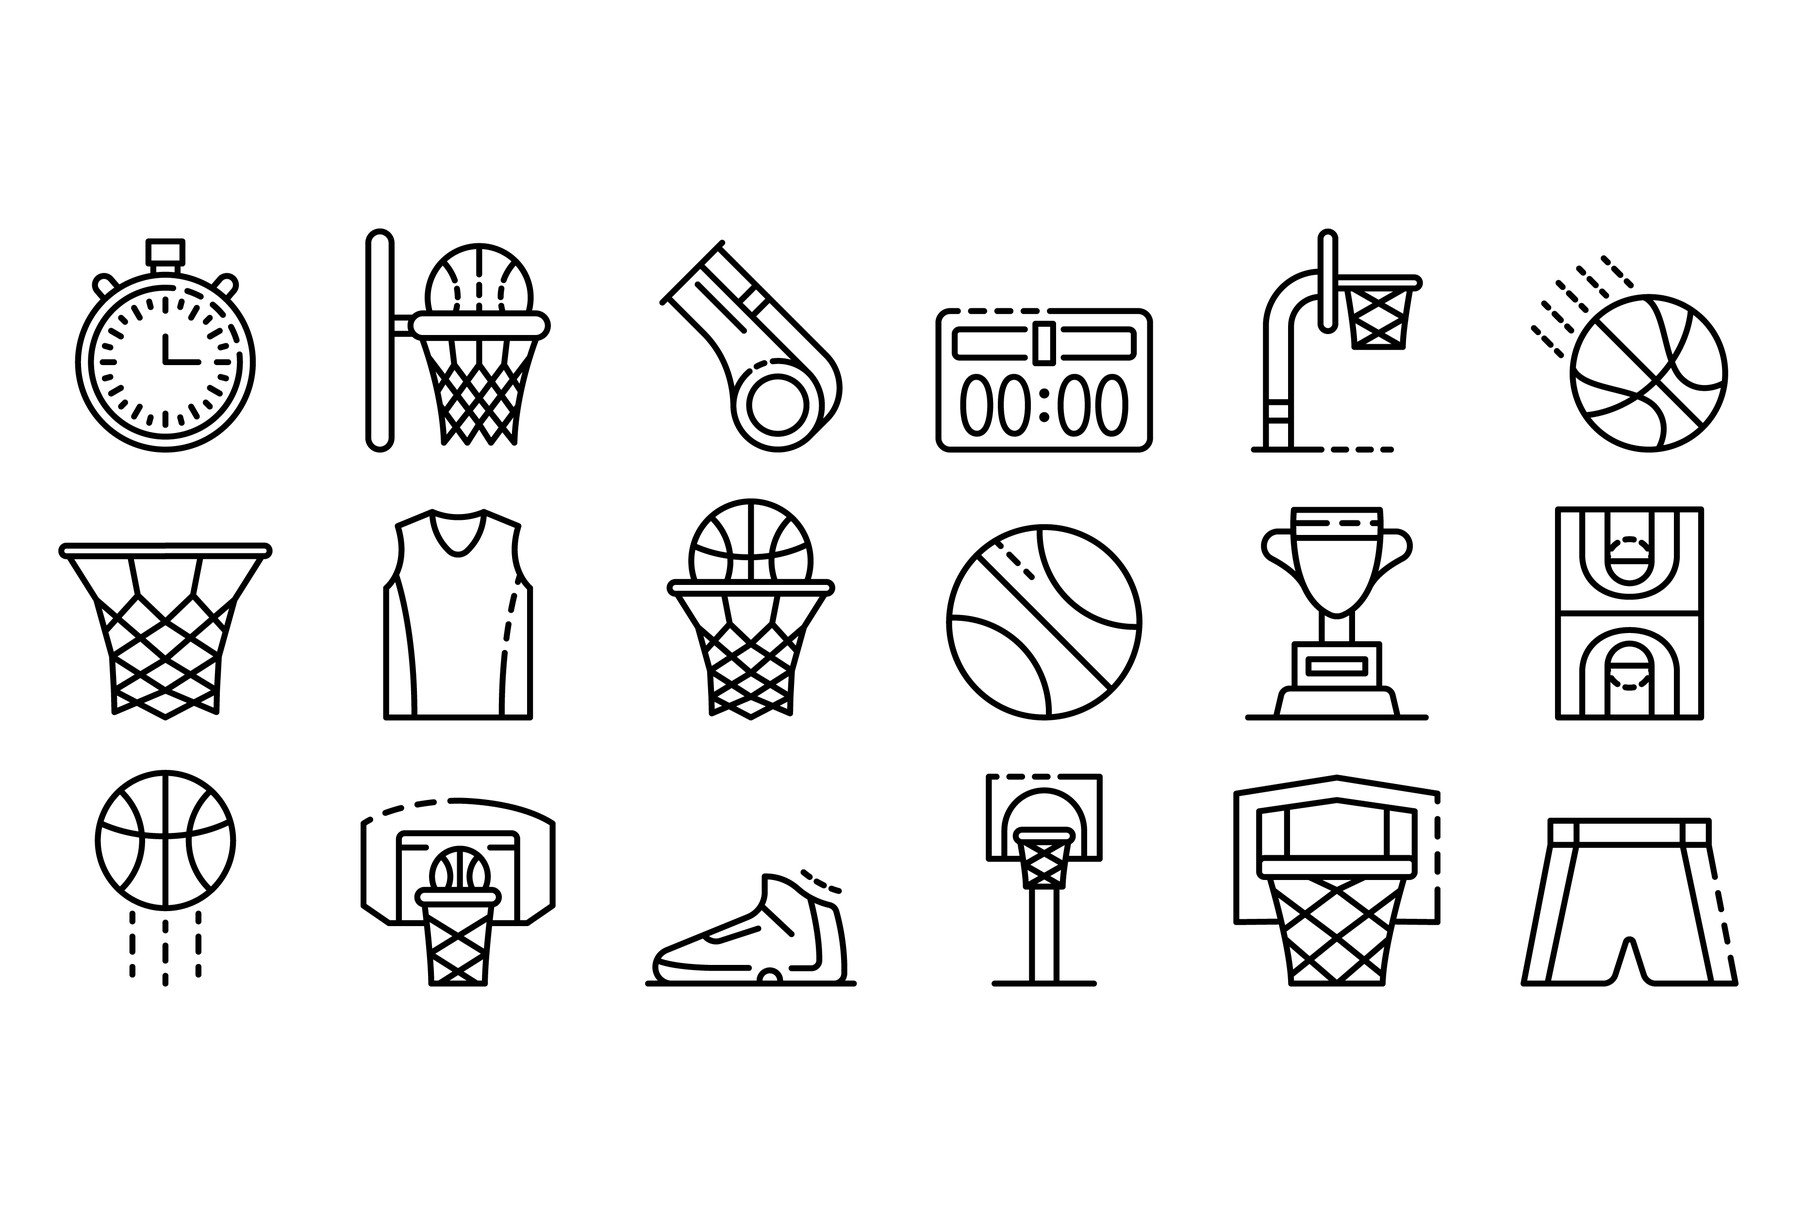 Basketball equipment icons set cover image.